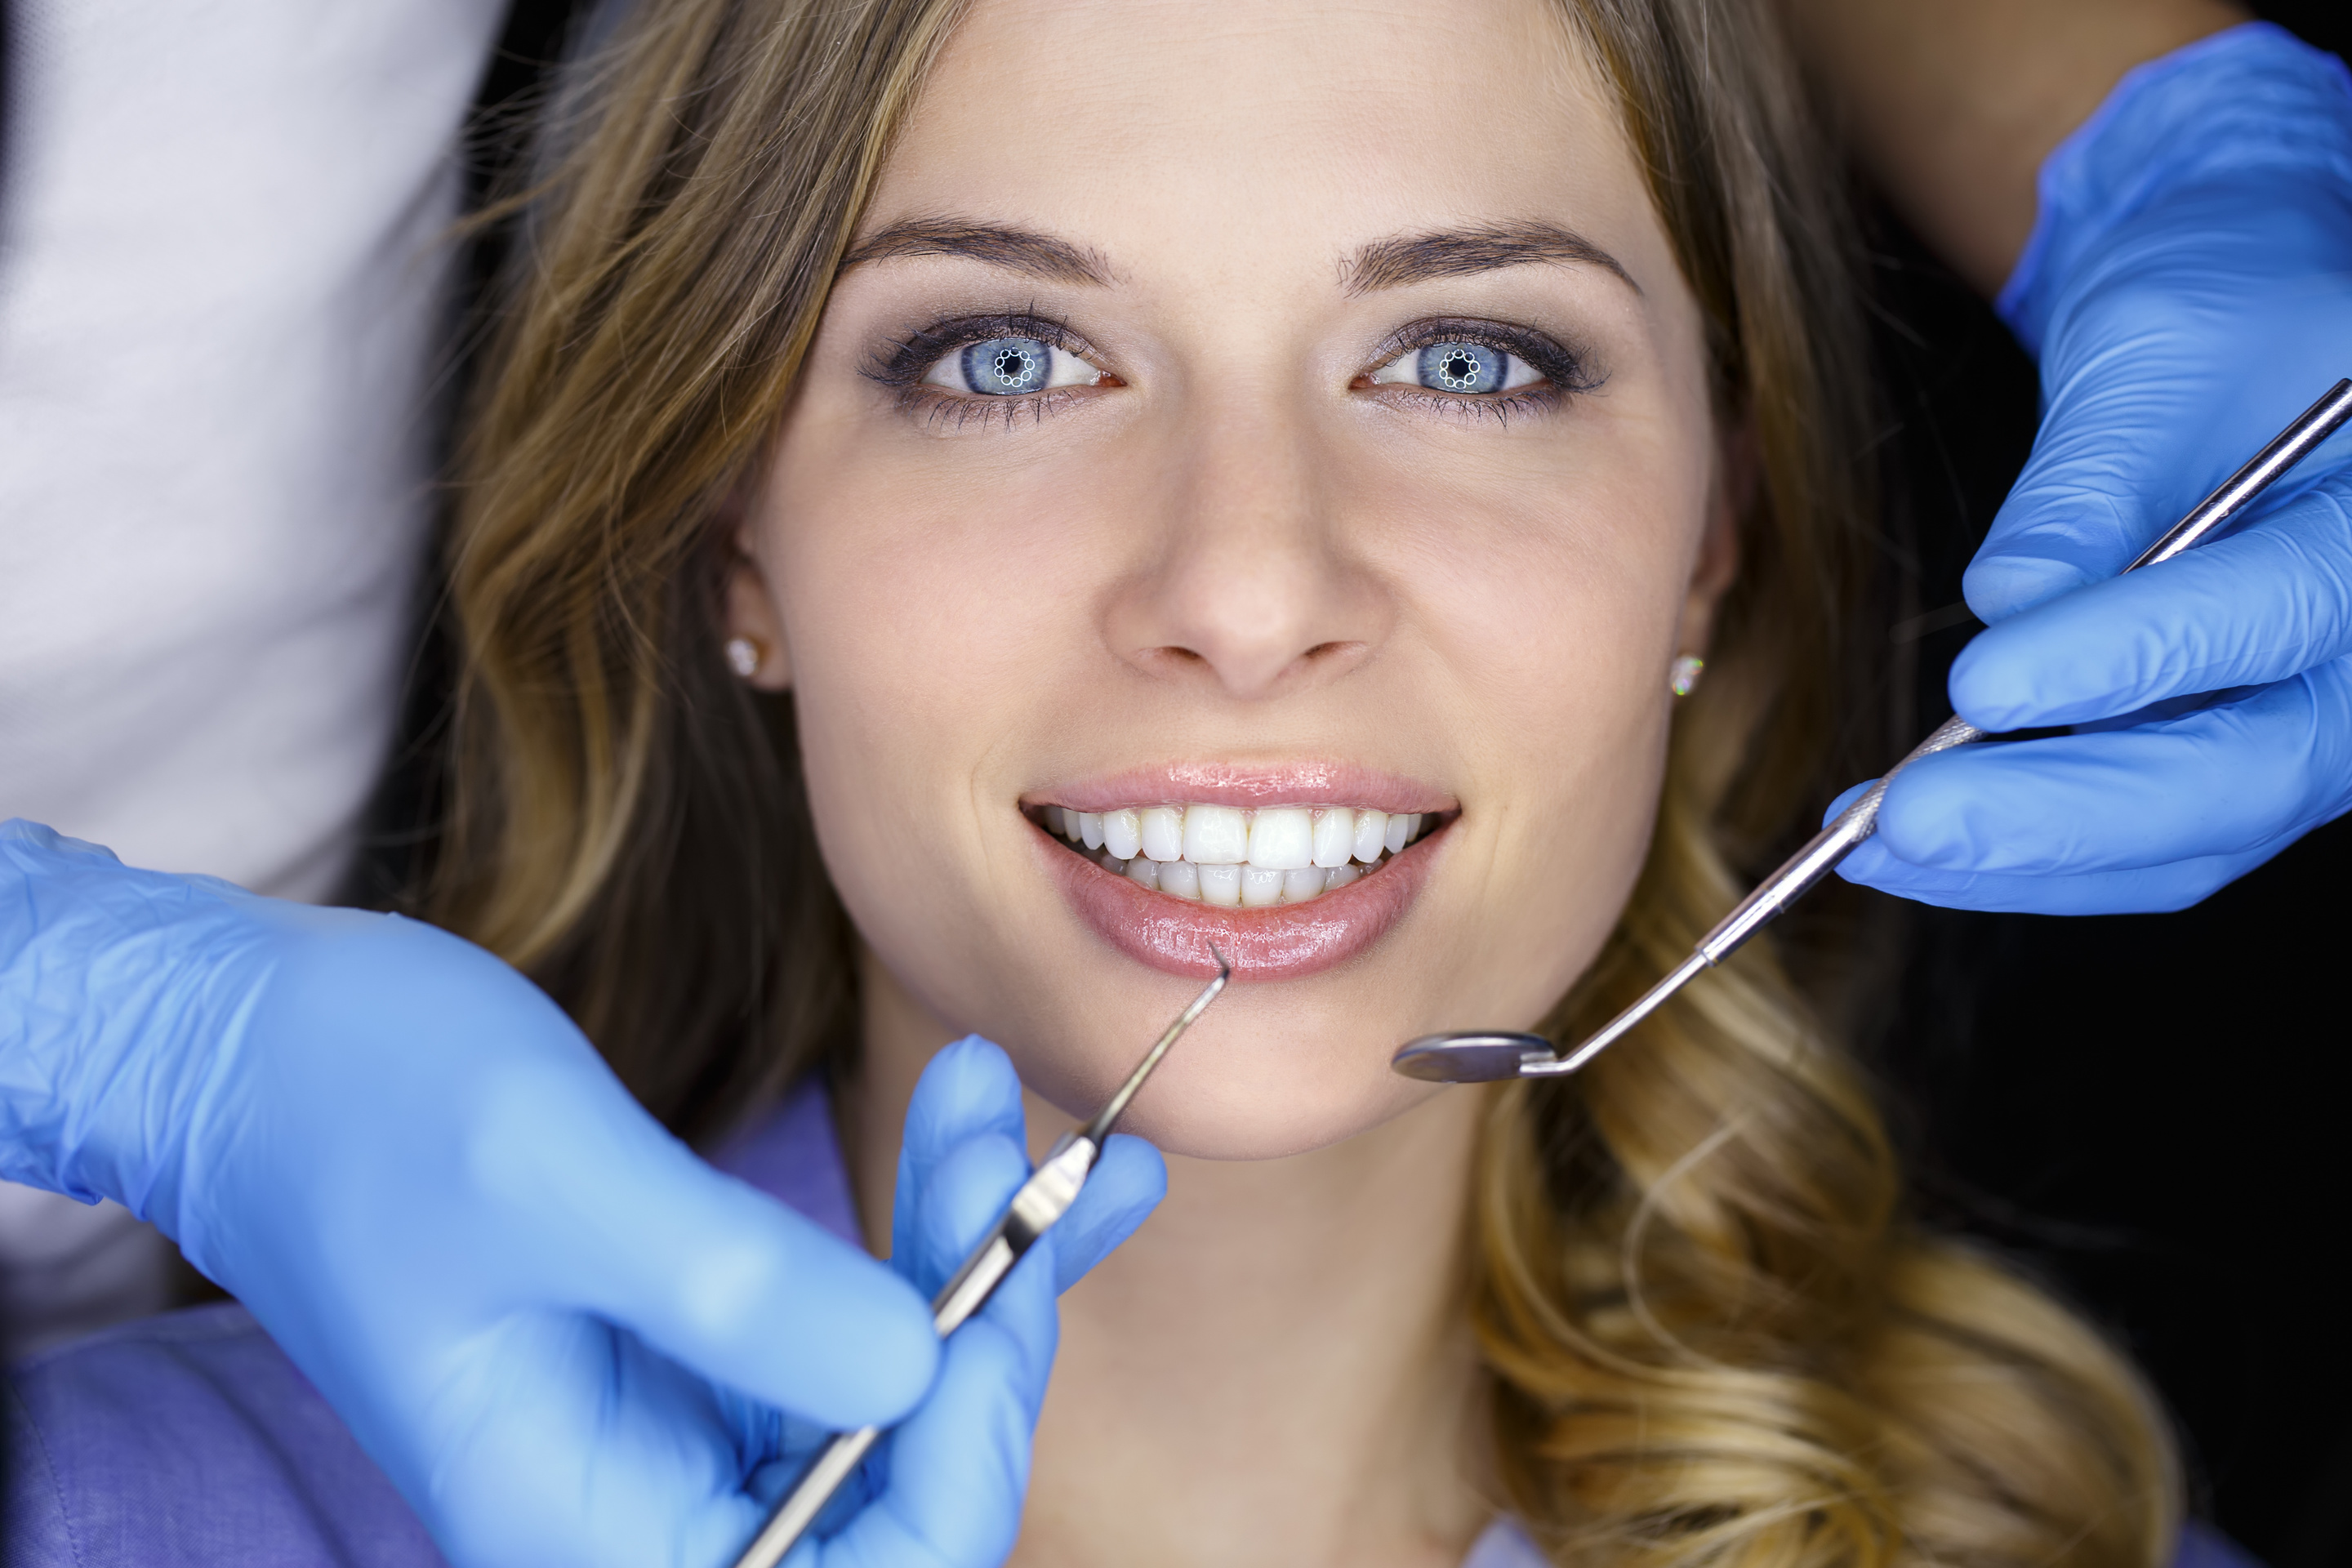 Where can I get a Costa Mesa periodontal treatment?